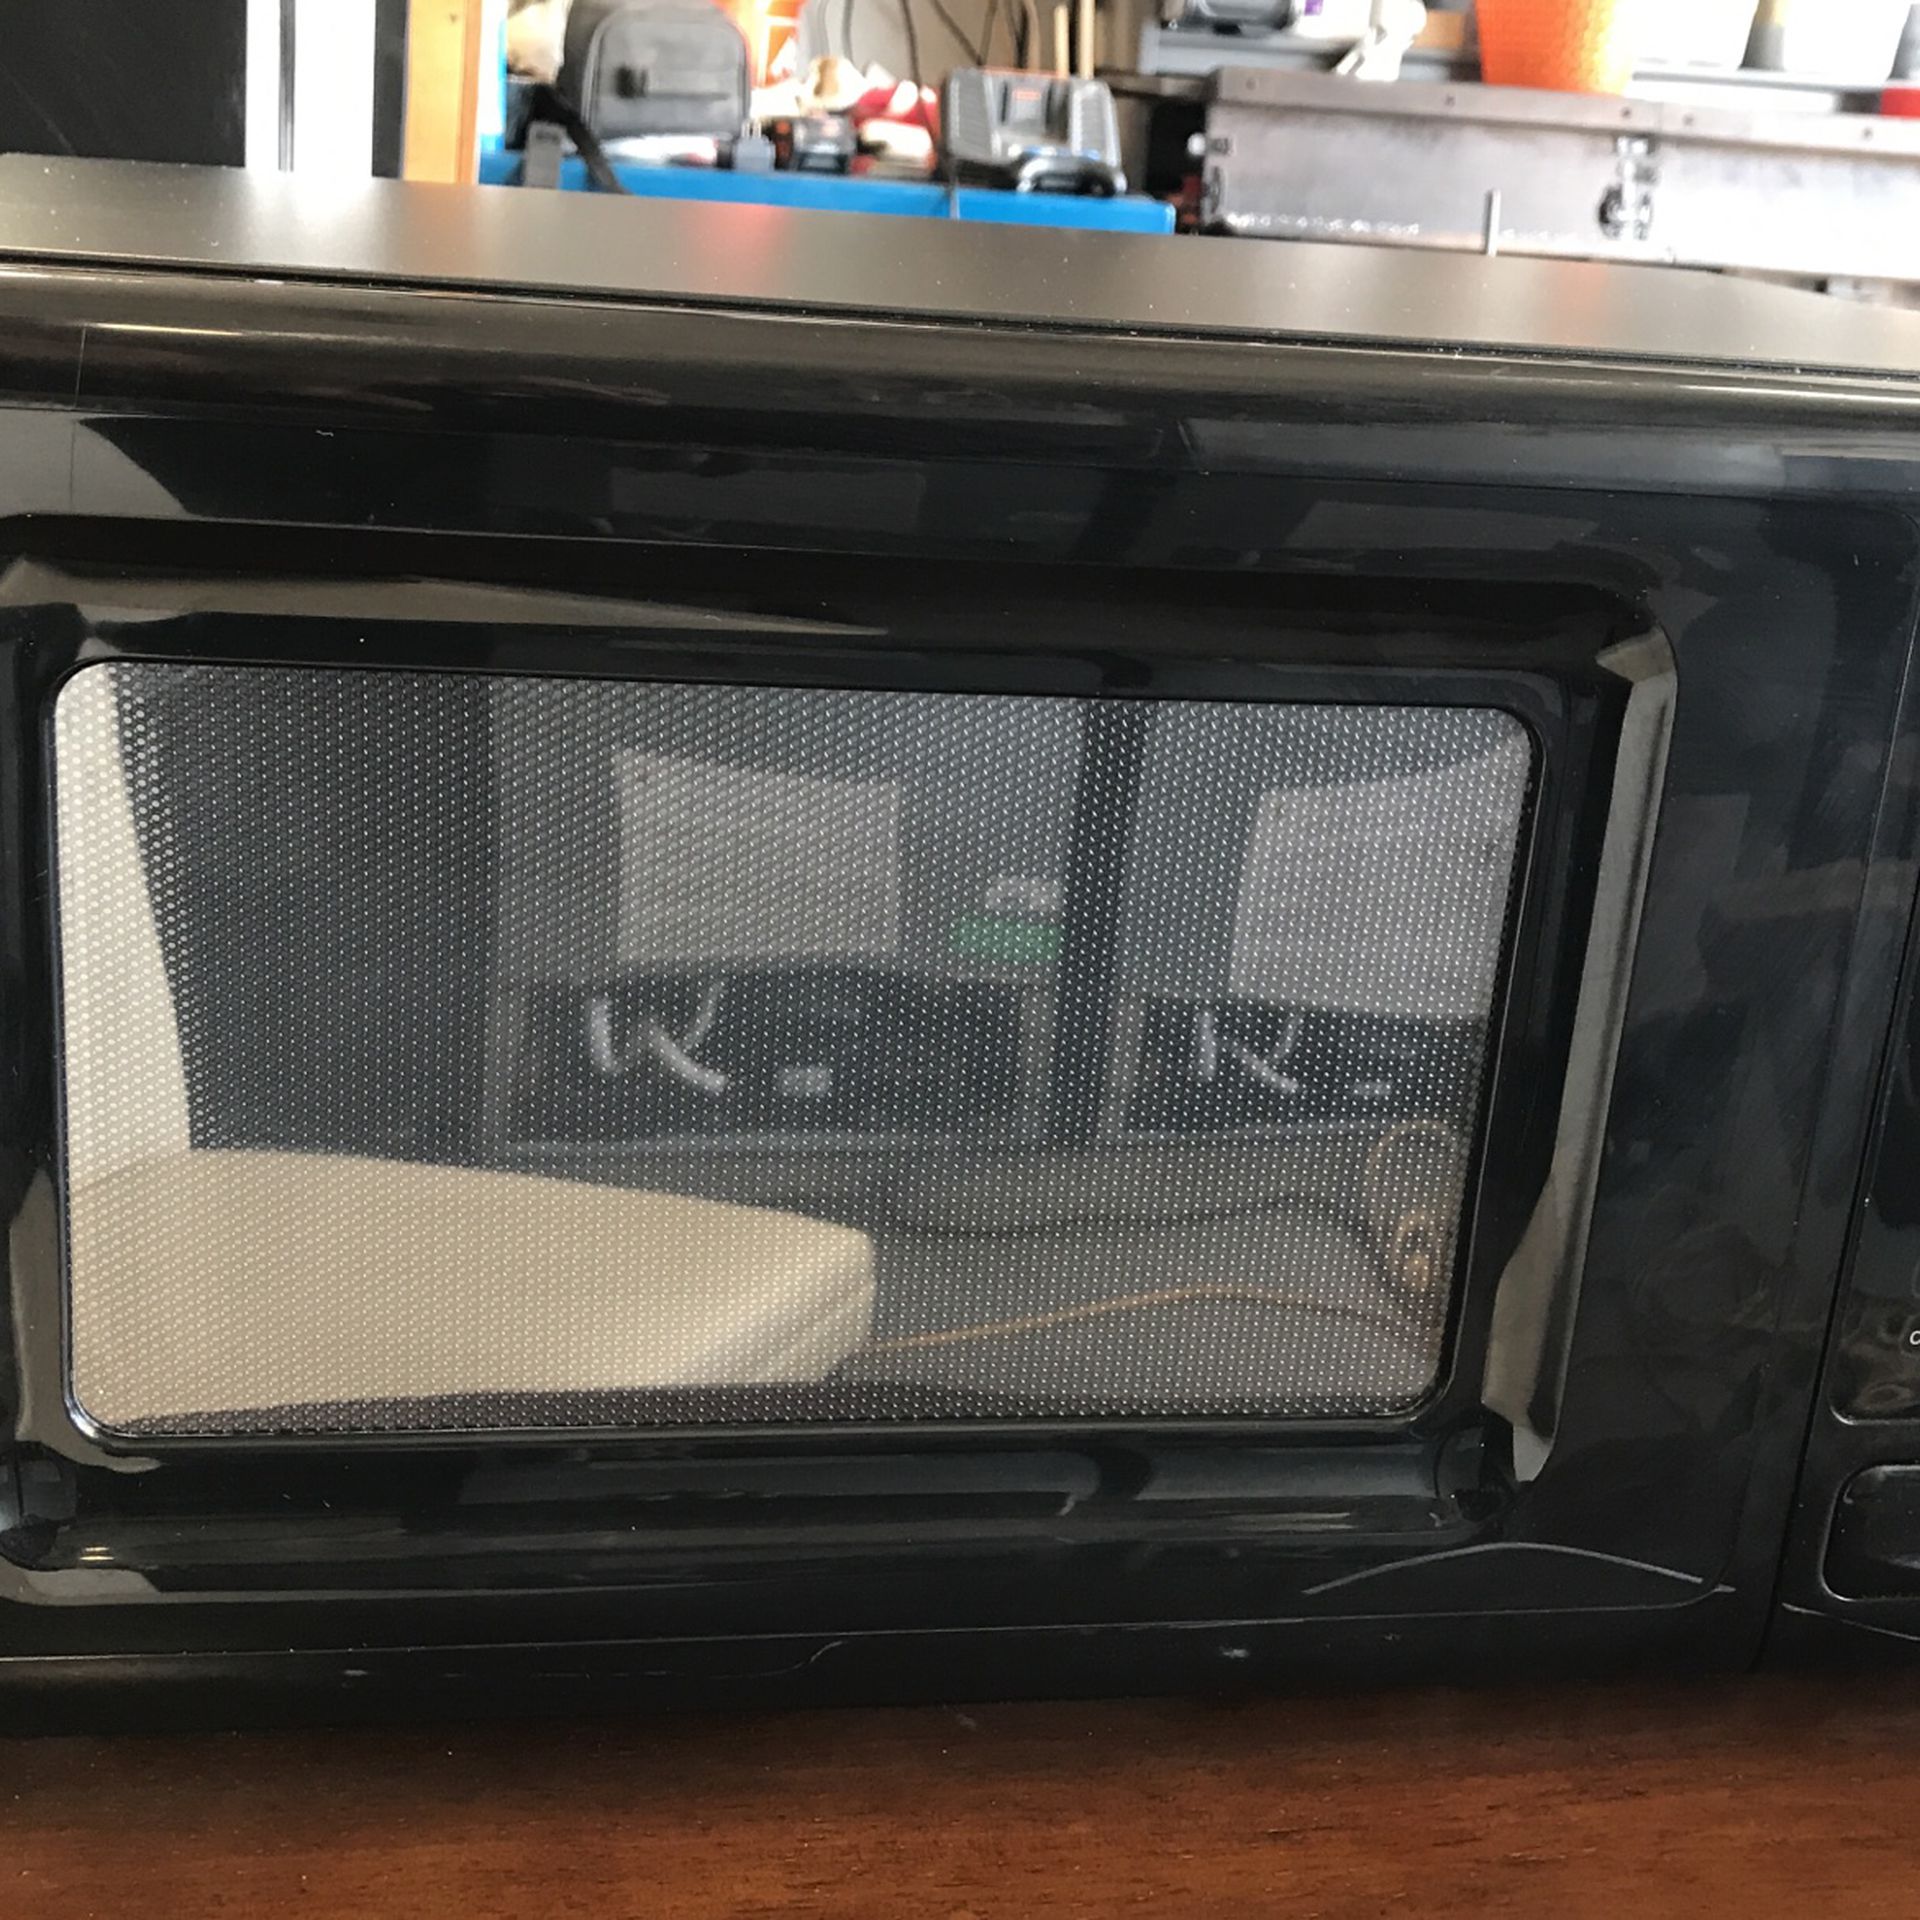 Microwave Countertop 